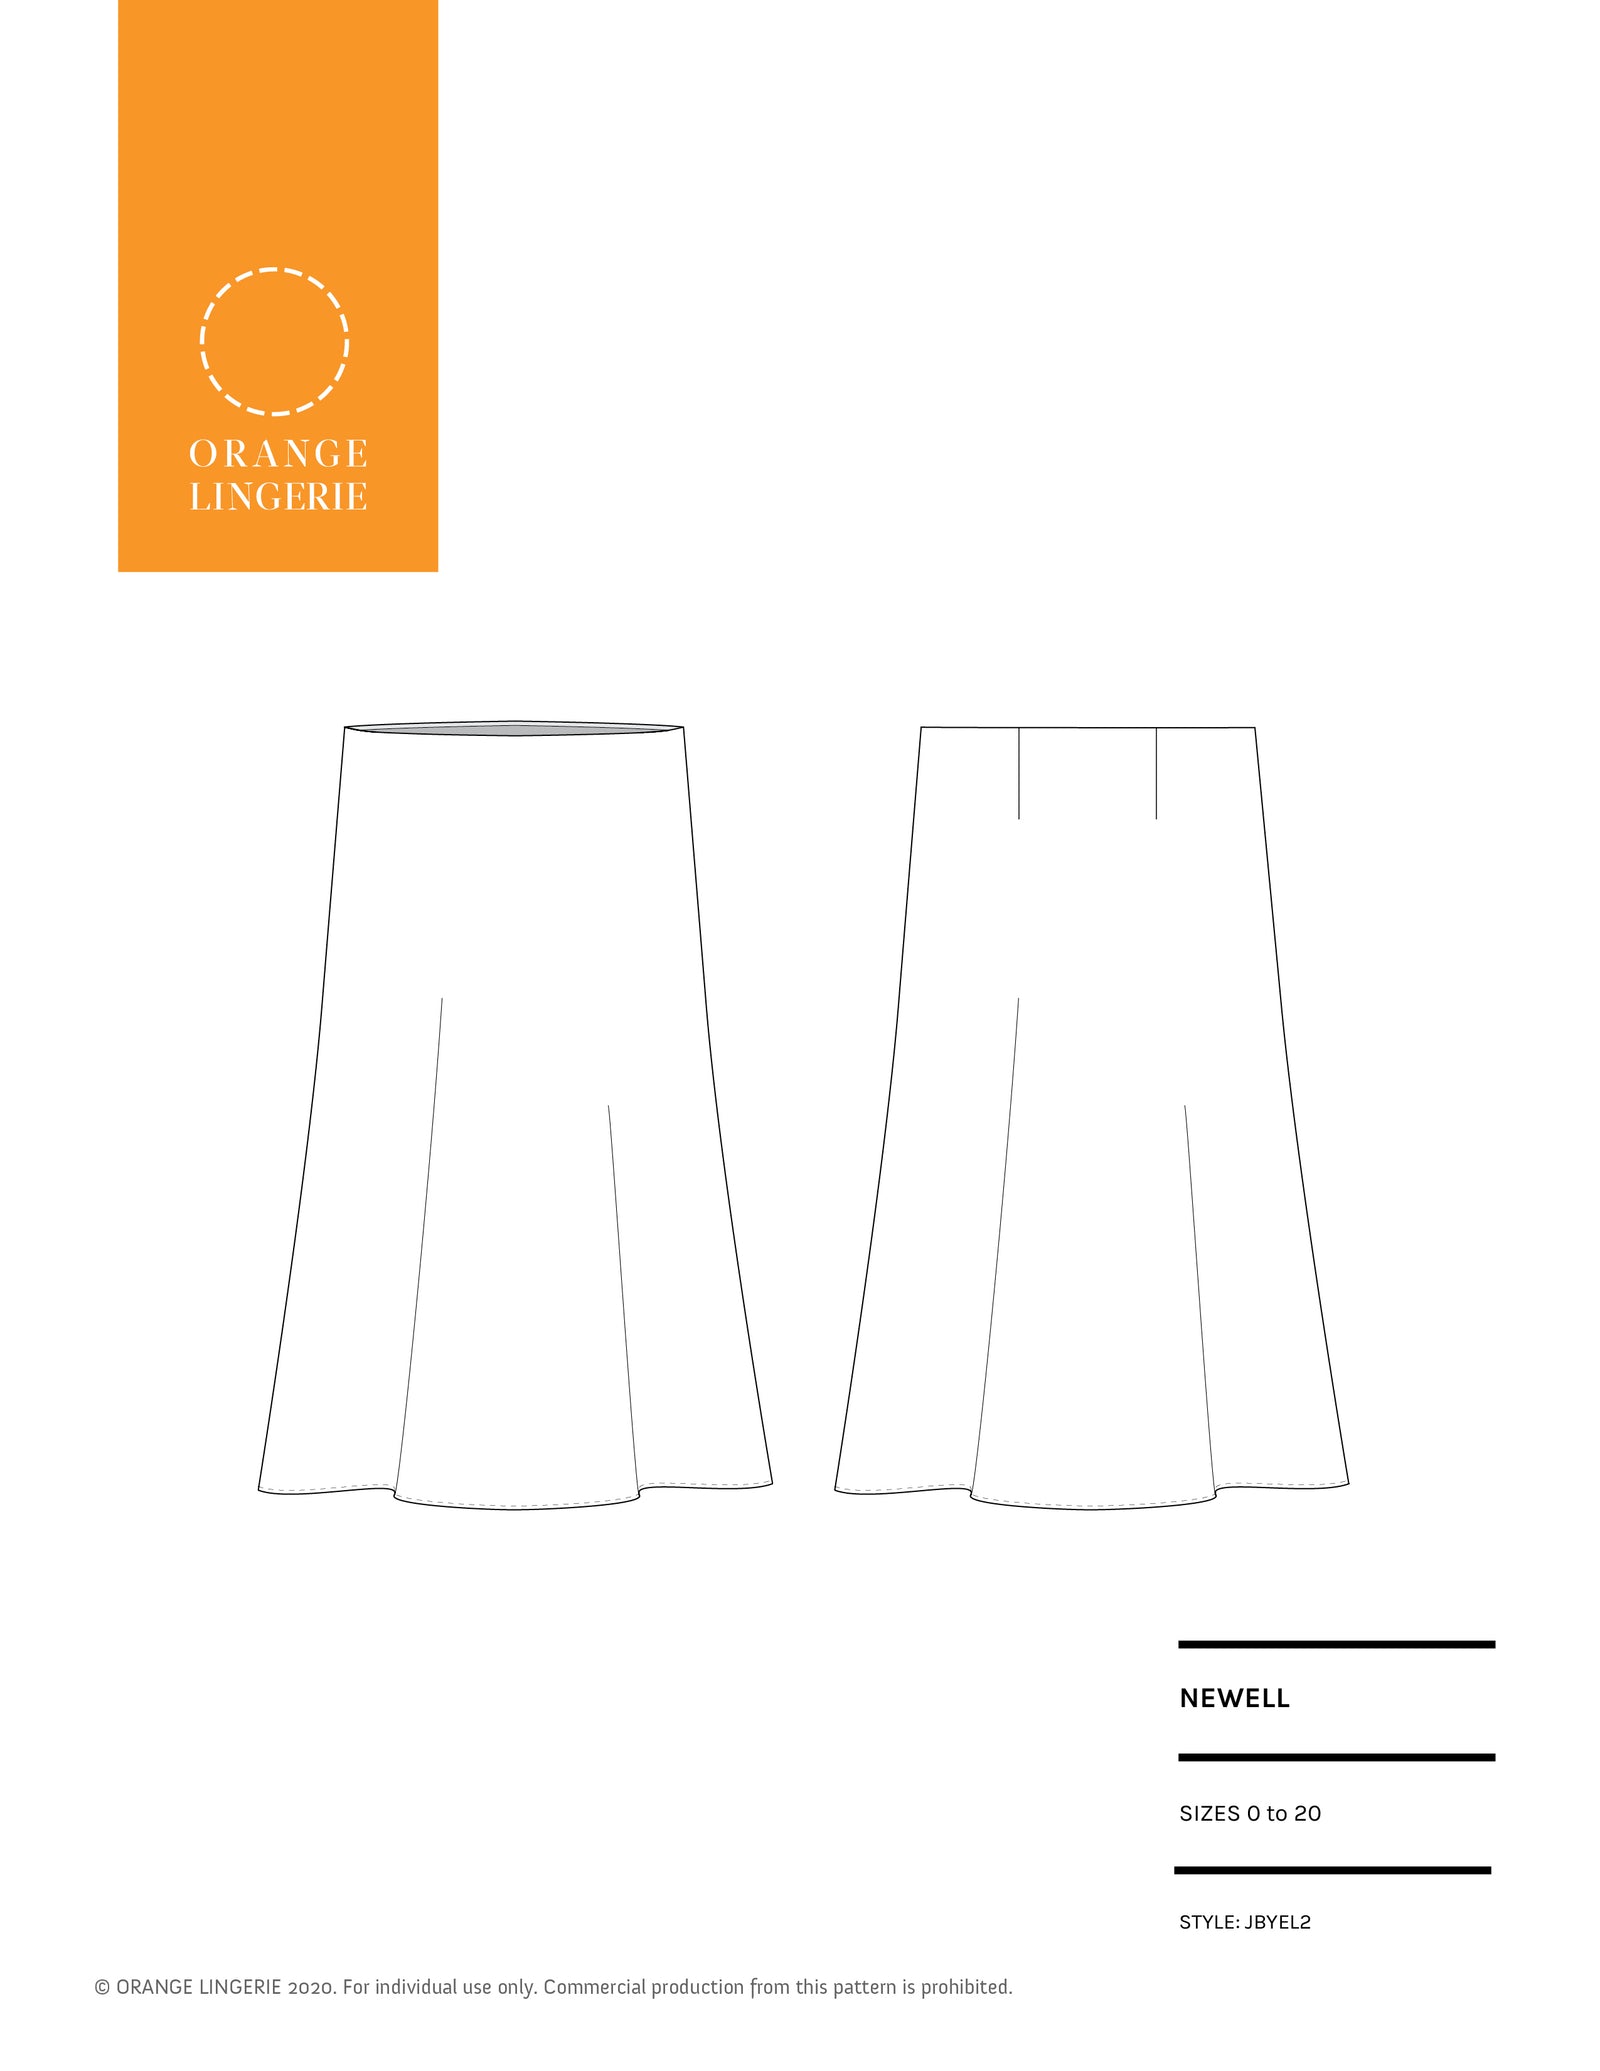 Mystic Bra Instant Download PDF Sewing Pattern - Orange Lingerie